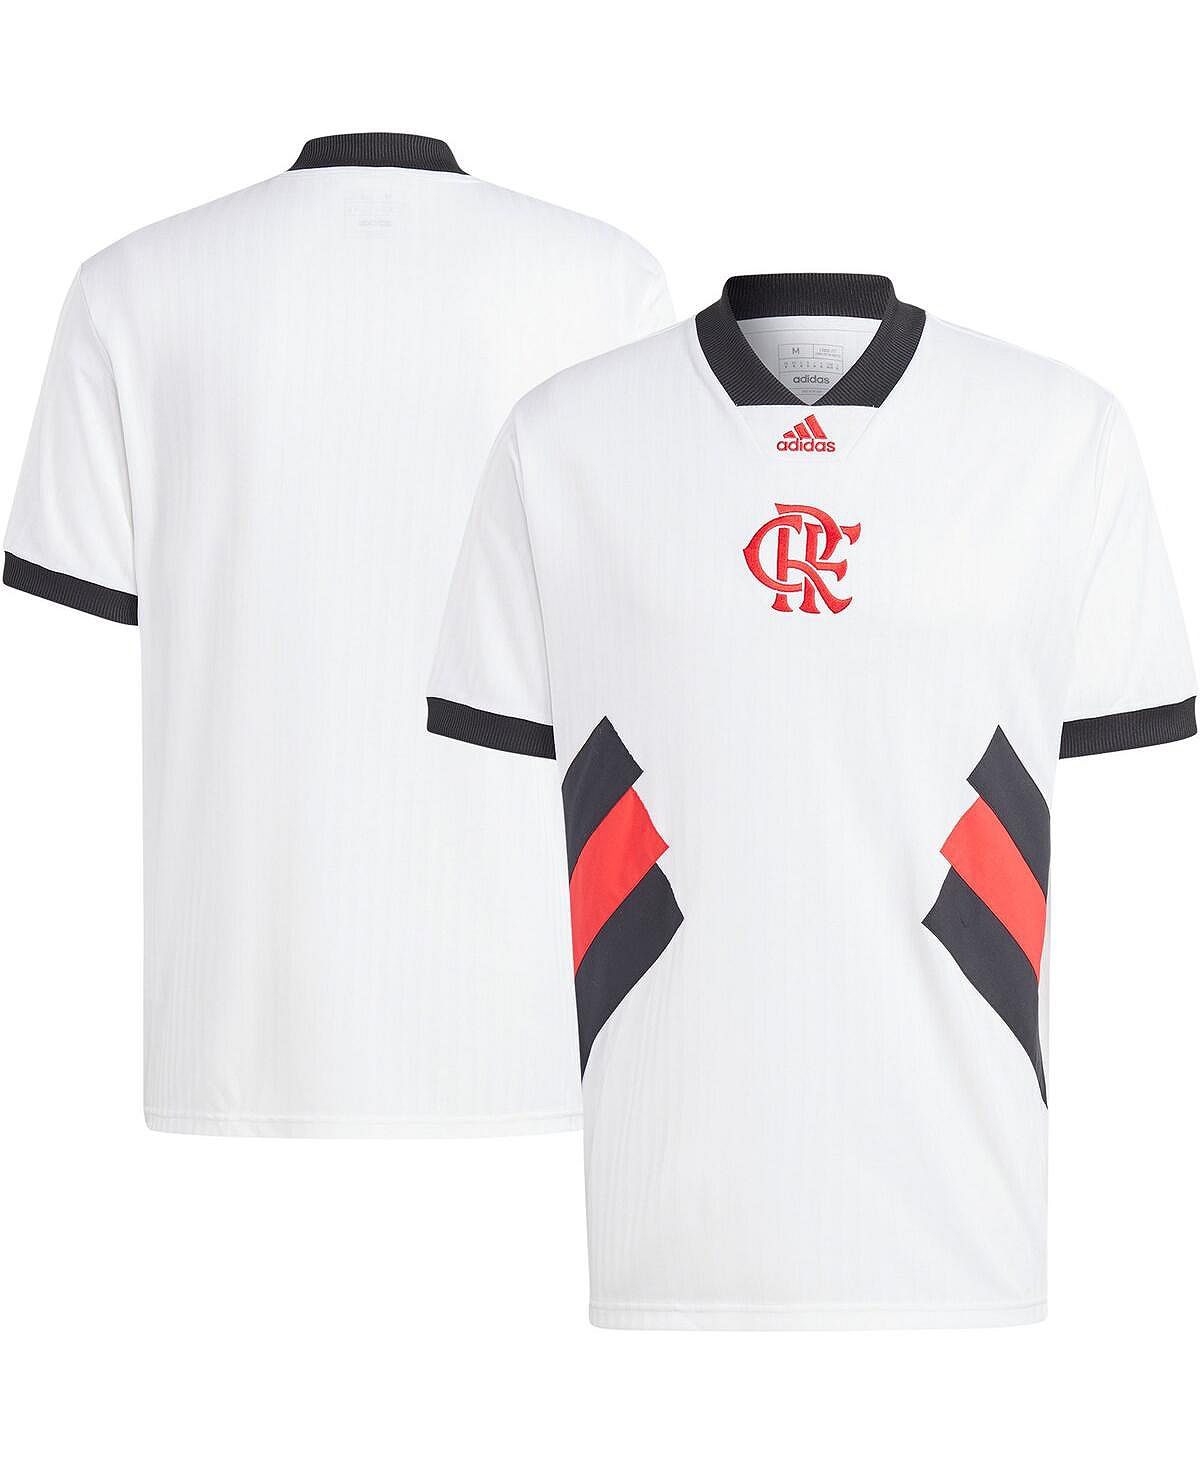 Мужское белое джерси CR Flamengo Football Icon adidas